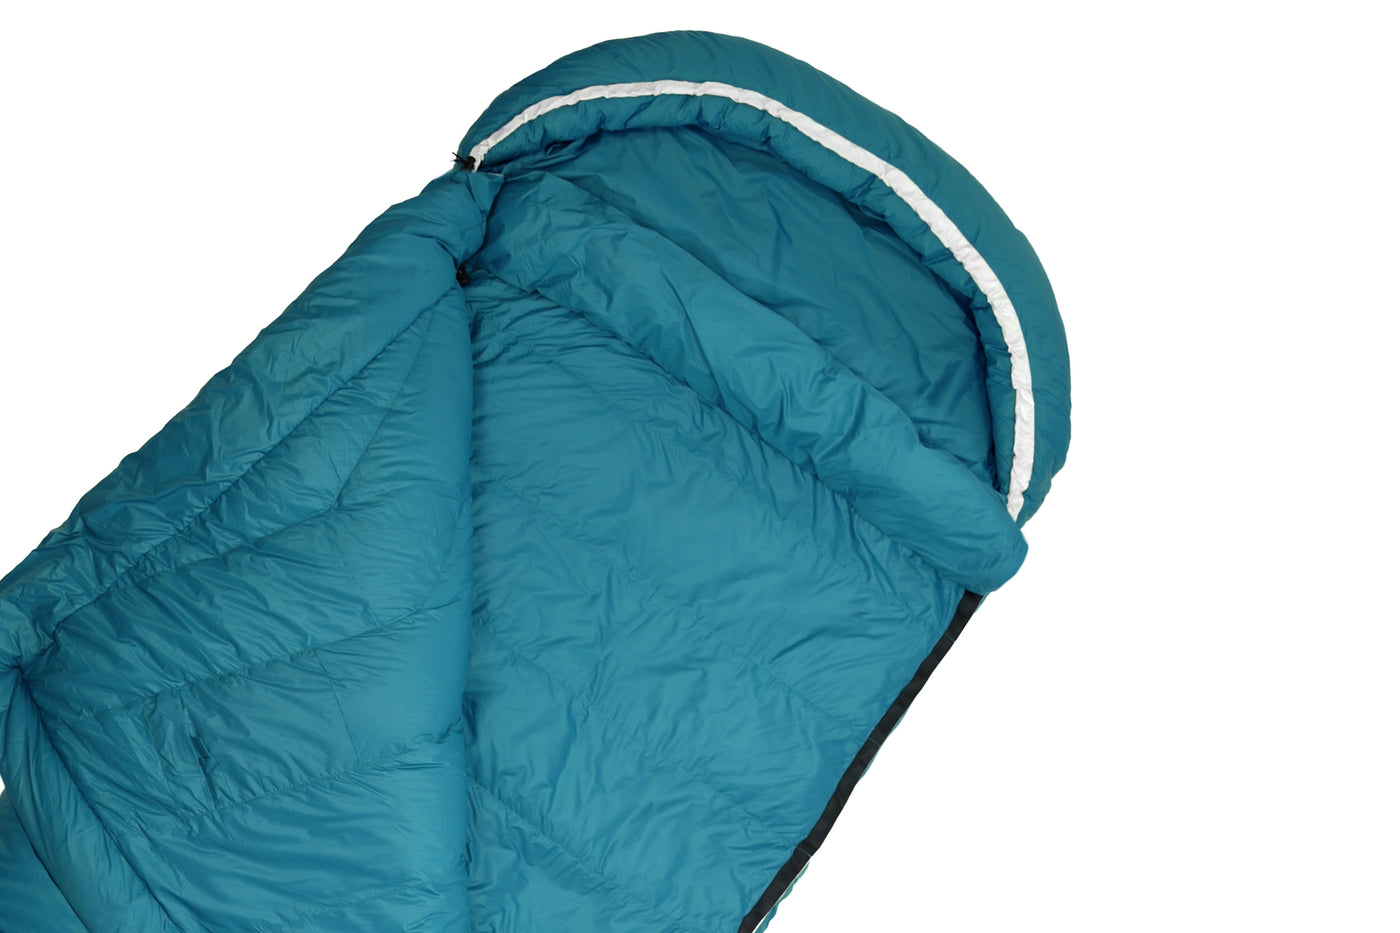 Grüezi bag Komfortschlafsack Biopod DownWool Subzero Comfort - Wärmekragen